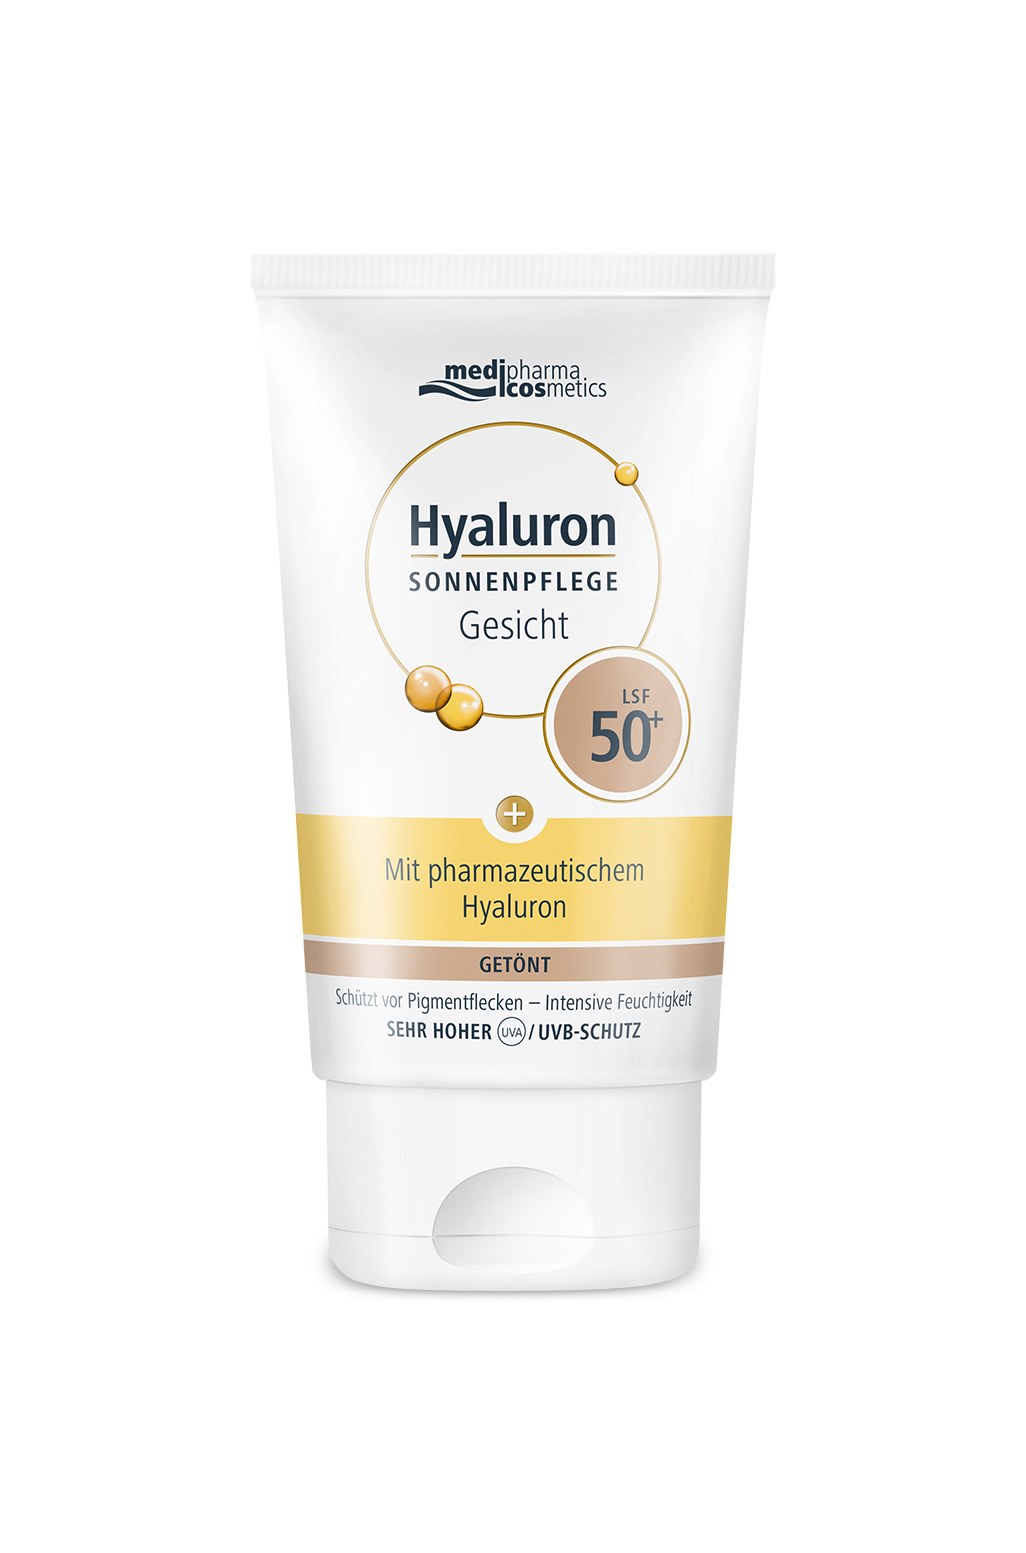 medipharma cosmetics - Hyaluron SONNENPFLEGE Gesicht GETÖNT LSF 50+